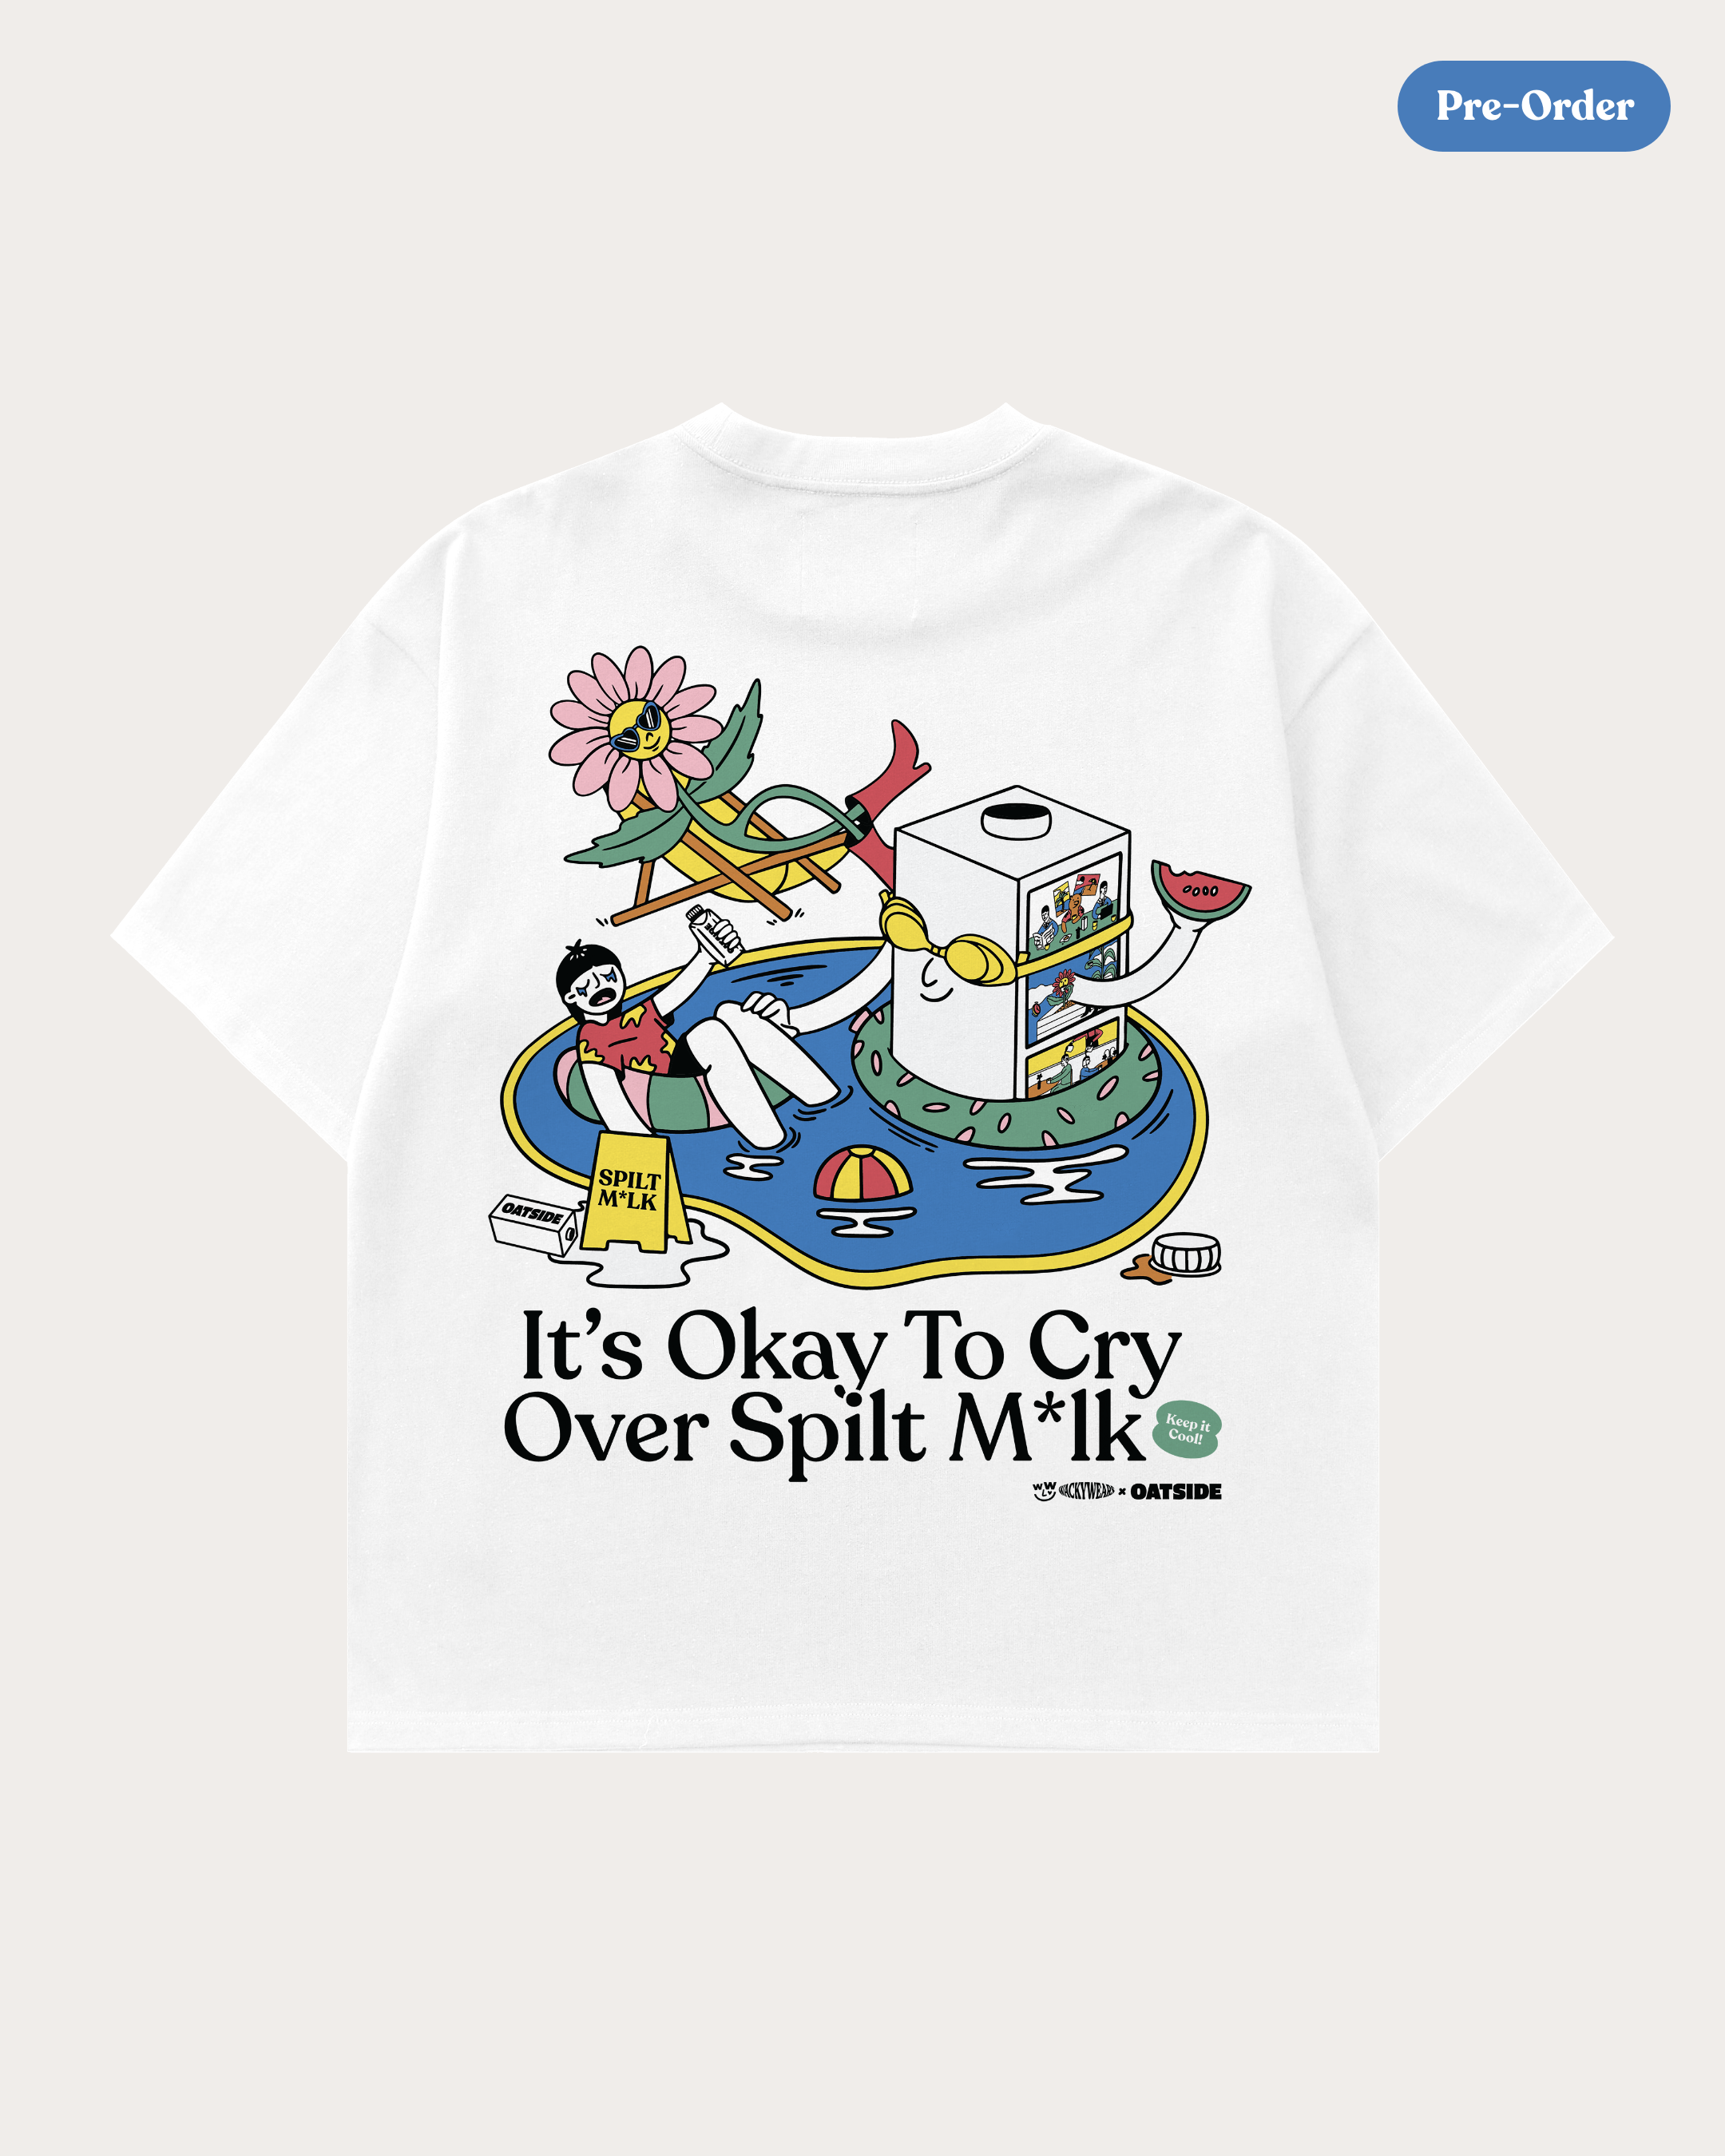 It's Okay To Cry Over Spilt M*lk (White)